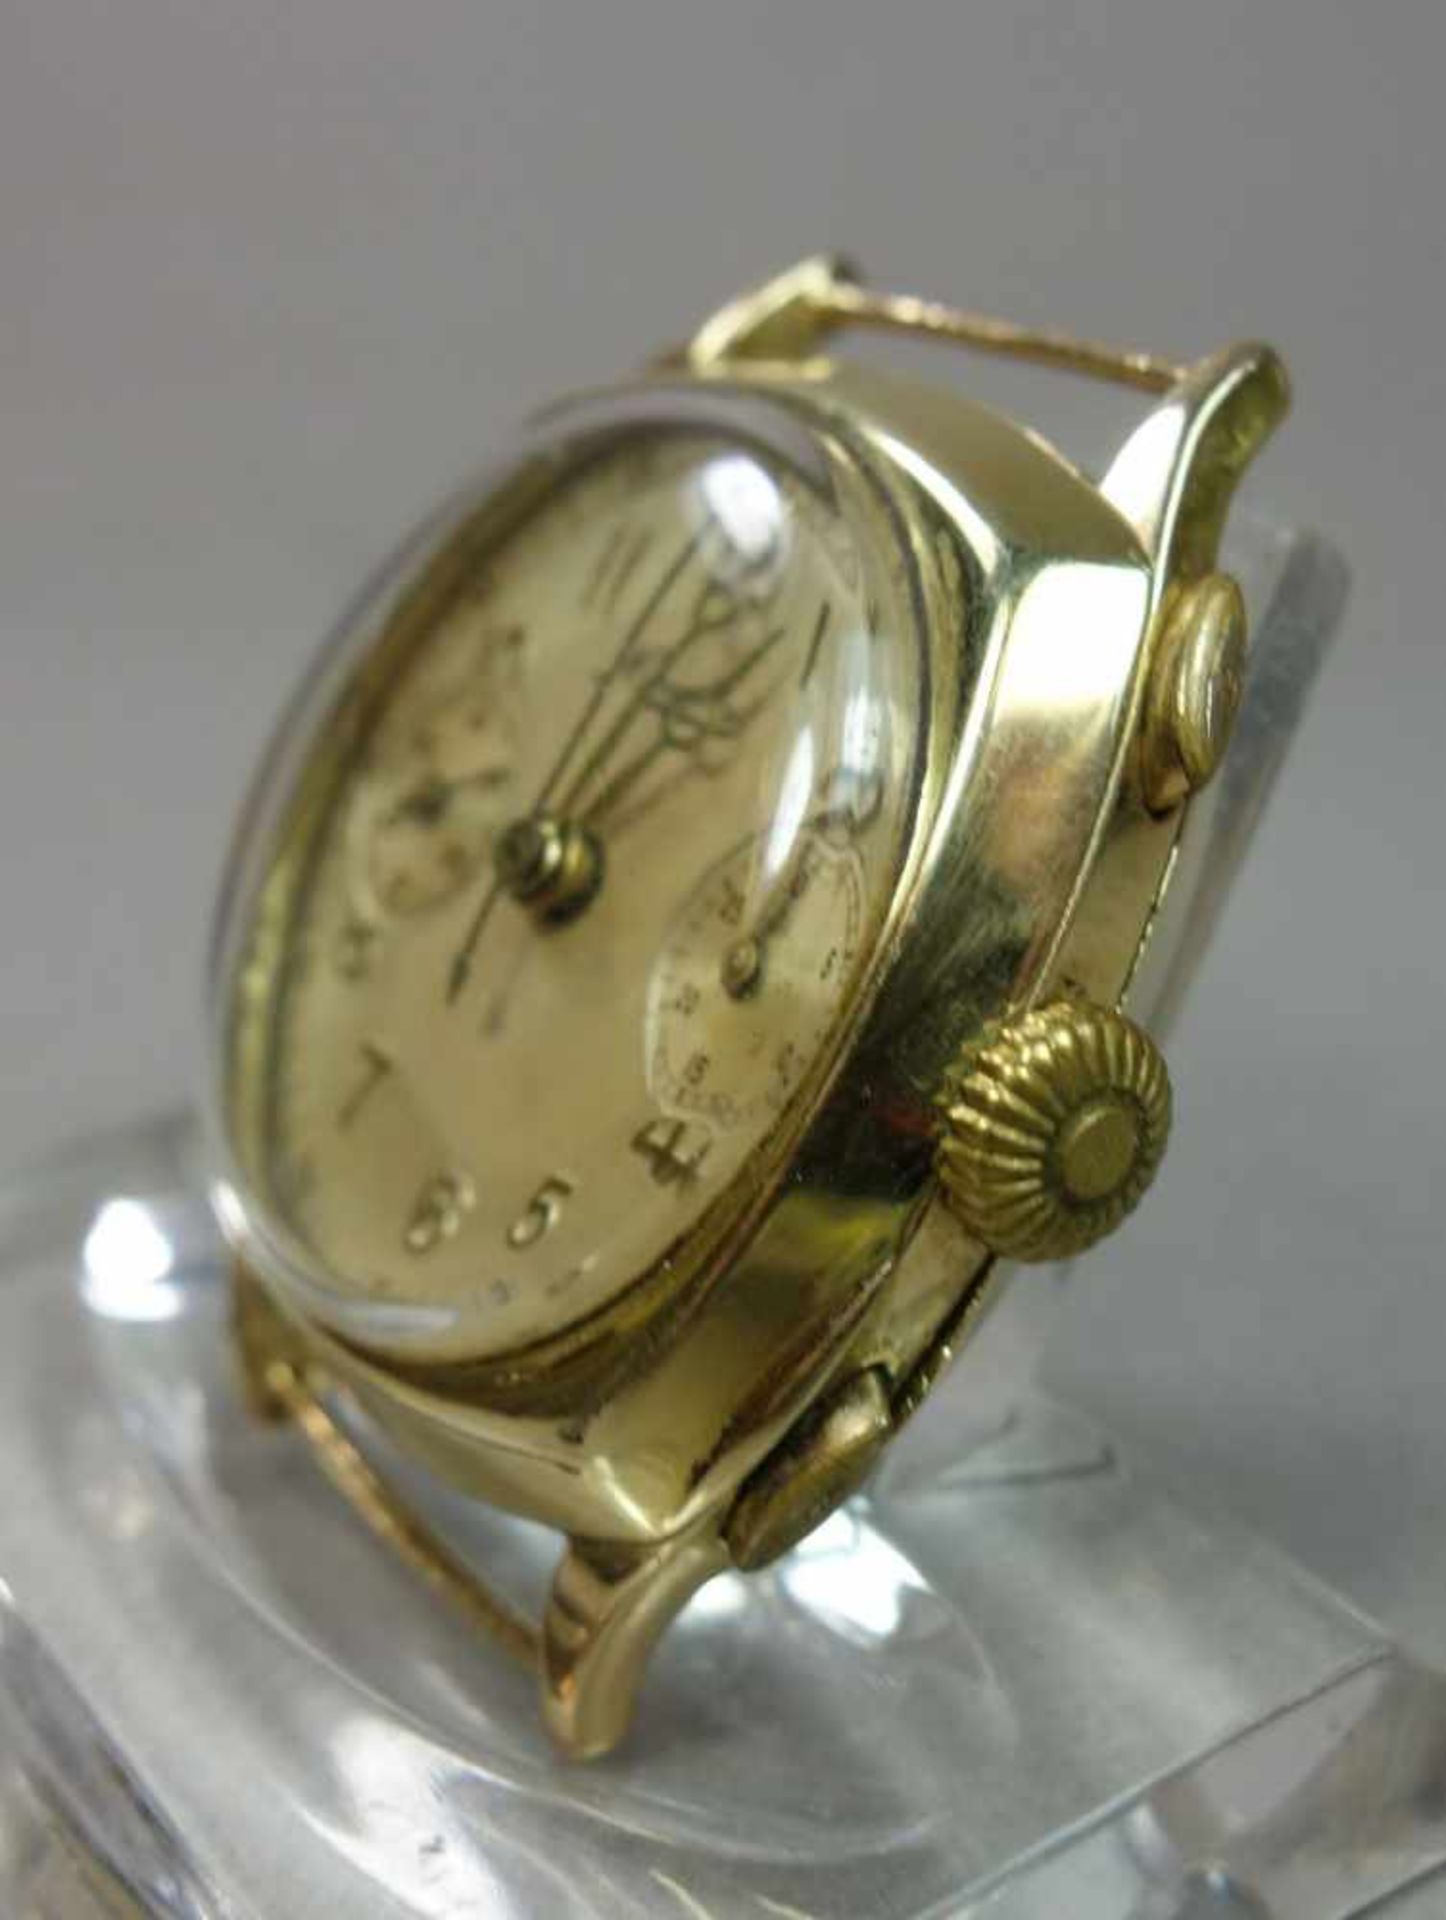 VINTAGE ARMBANDUHR / CHRONOGRAPH: Minerva / vintage wristwatch, wohl 1930er Jahre, Manufaktur - Bild 3 aus 7